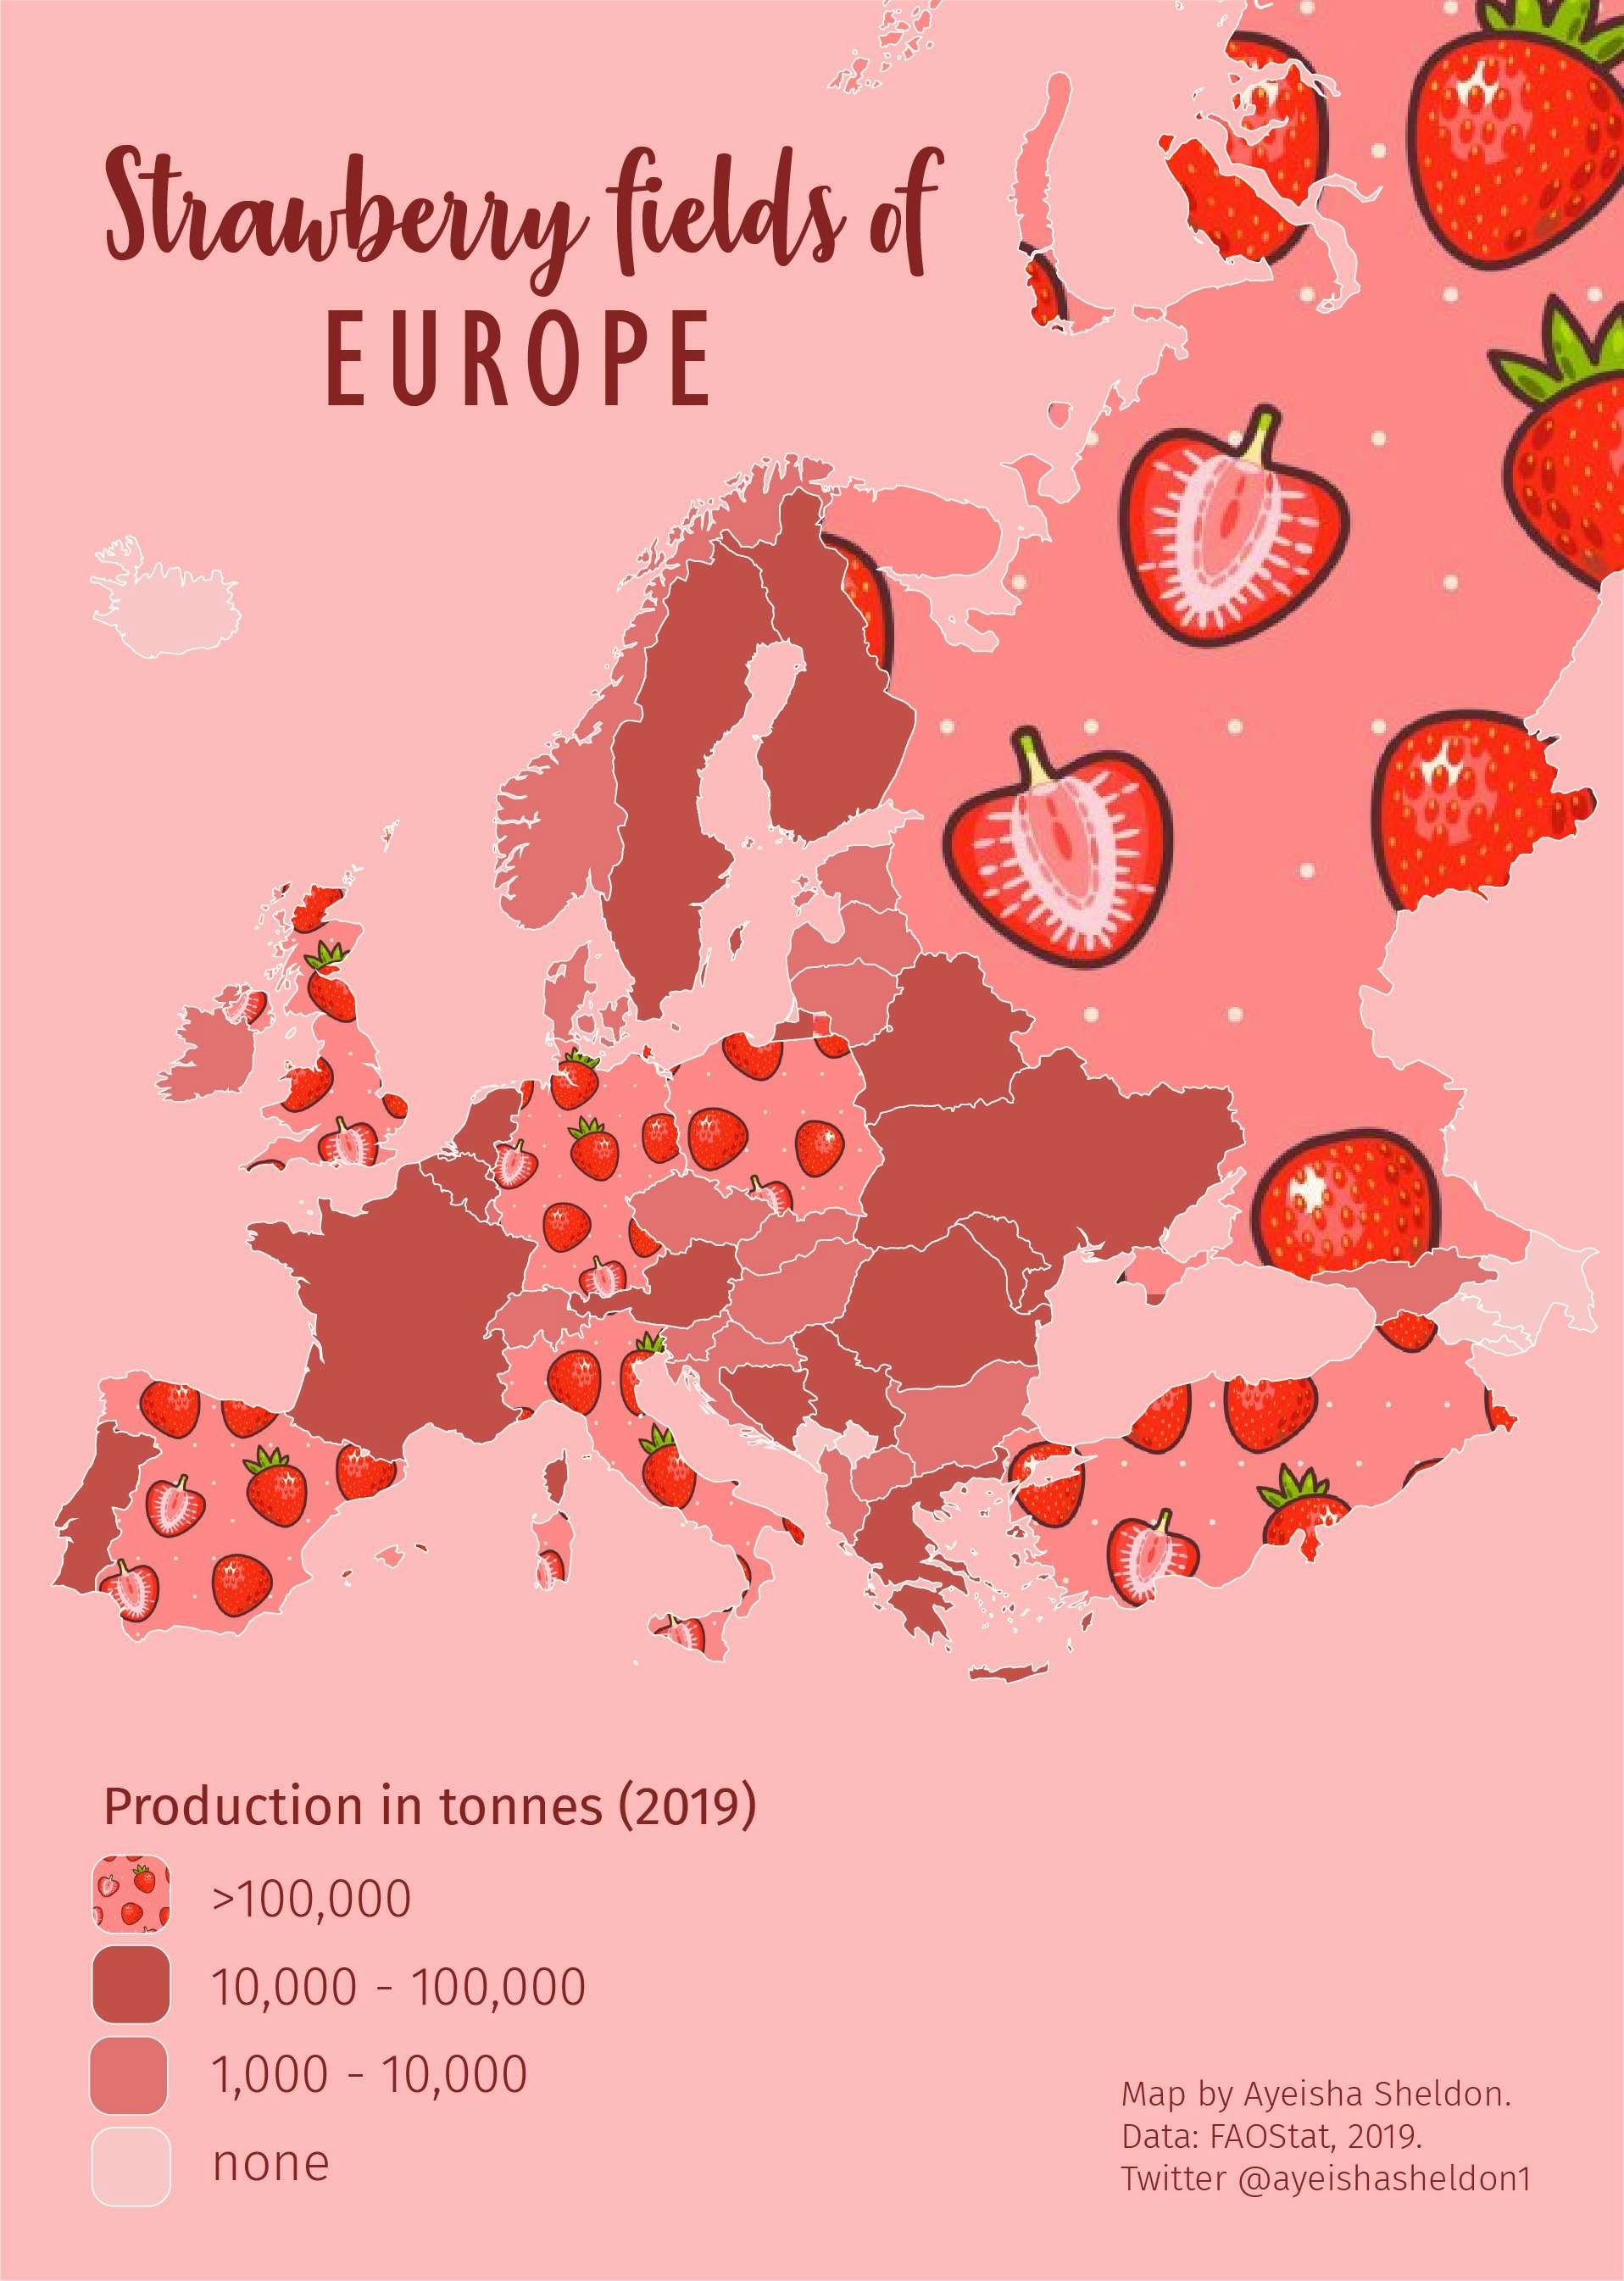 Strawberry fields of Europe